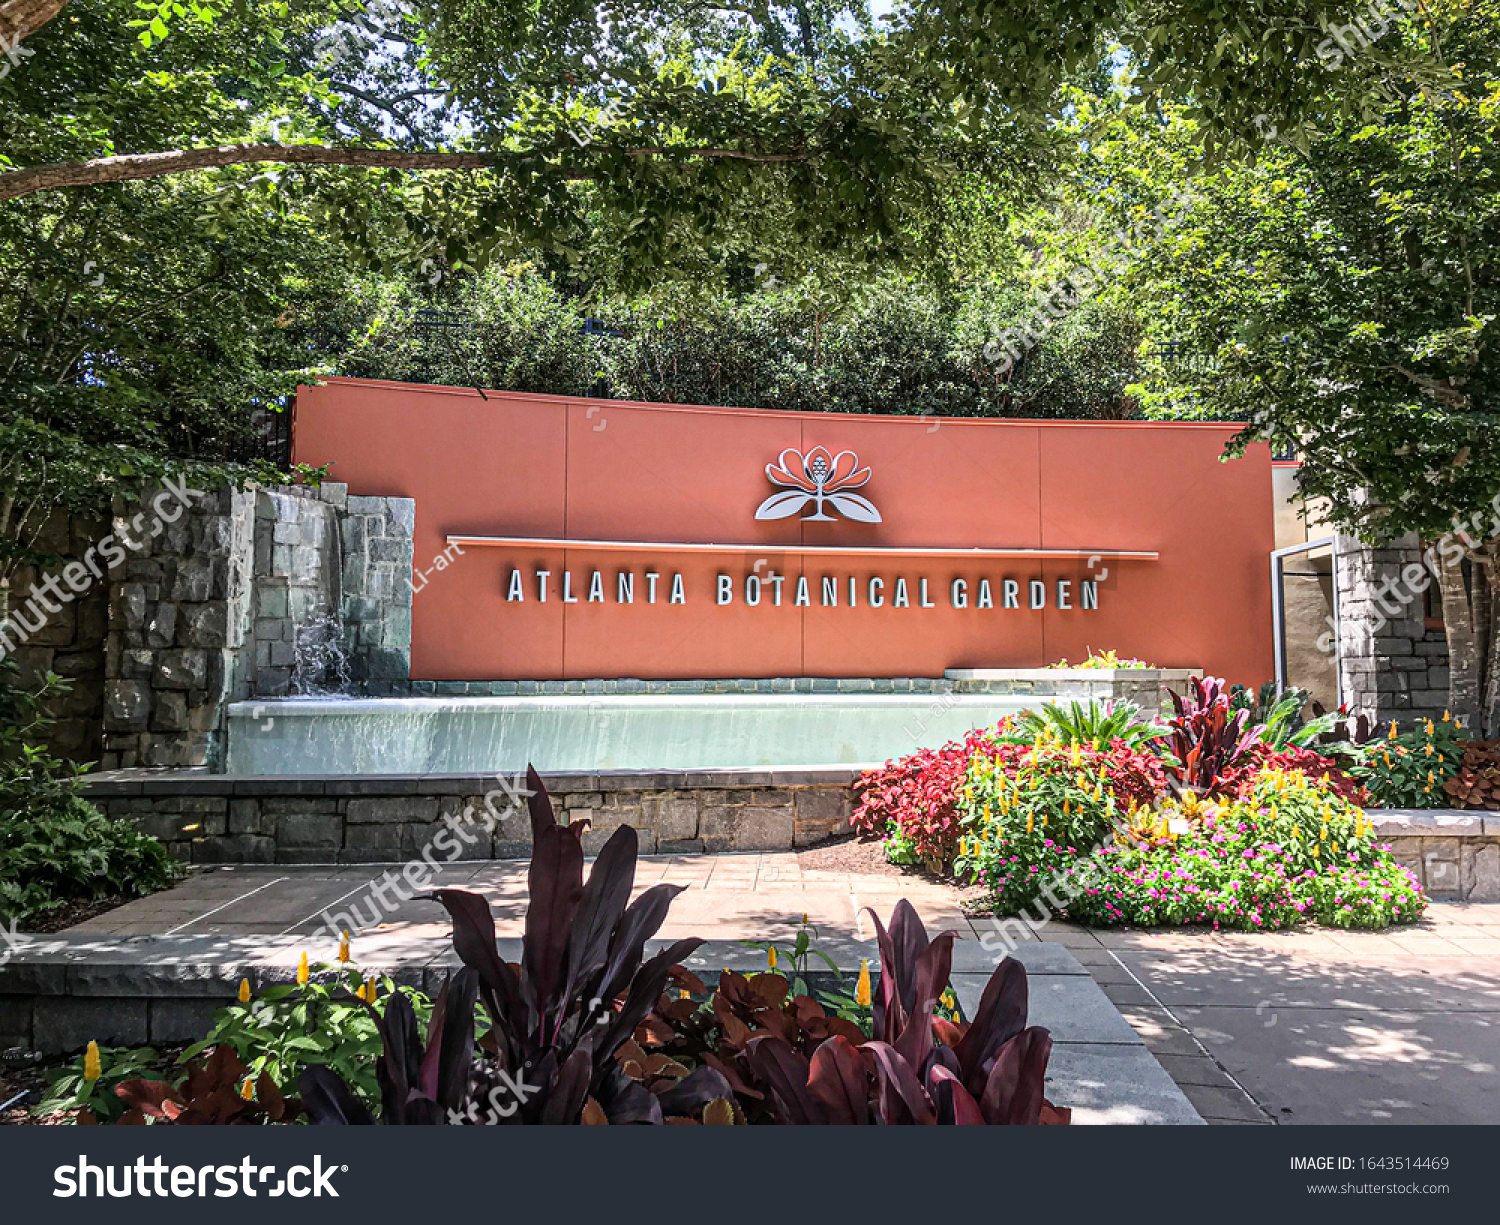 Atlanta Botanical Garden Images Stock Photos Vectors Shutterstock